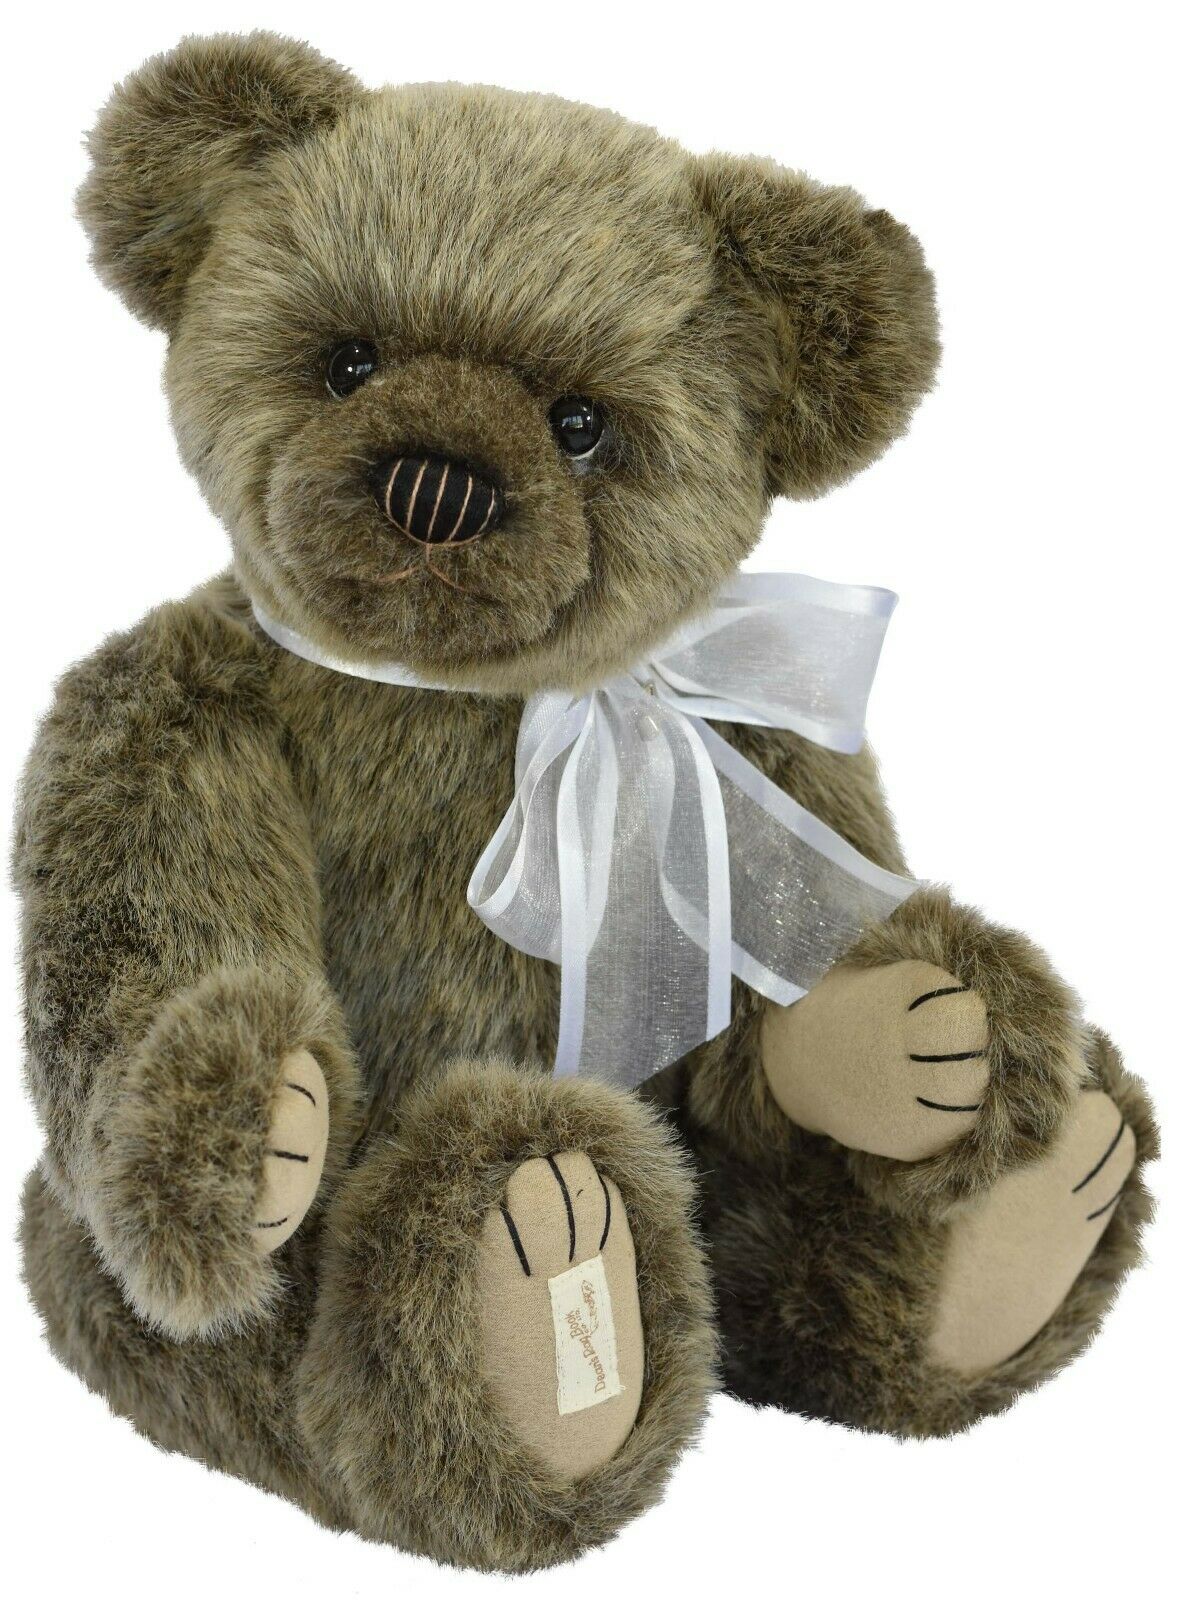 DEAN'S Teddy Gressingham honig-silber 40 cm 19.018.040 - Limitierte Edition 399 Exemplare